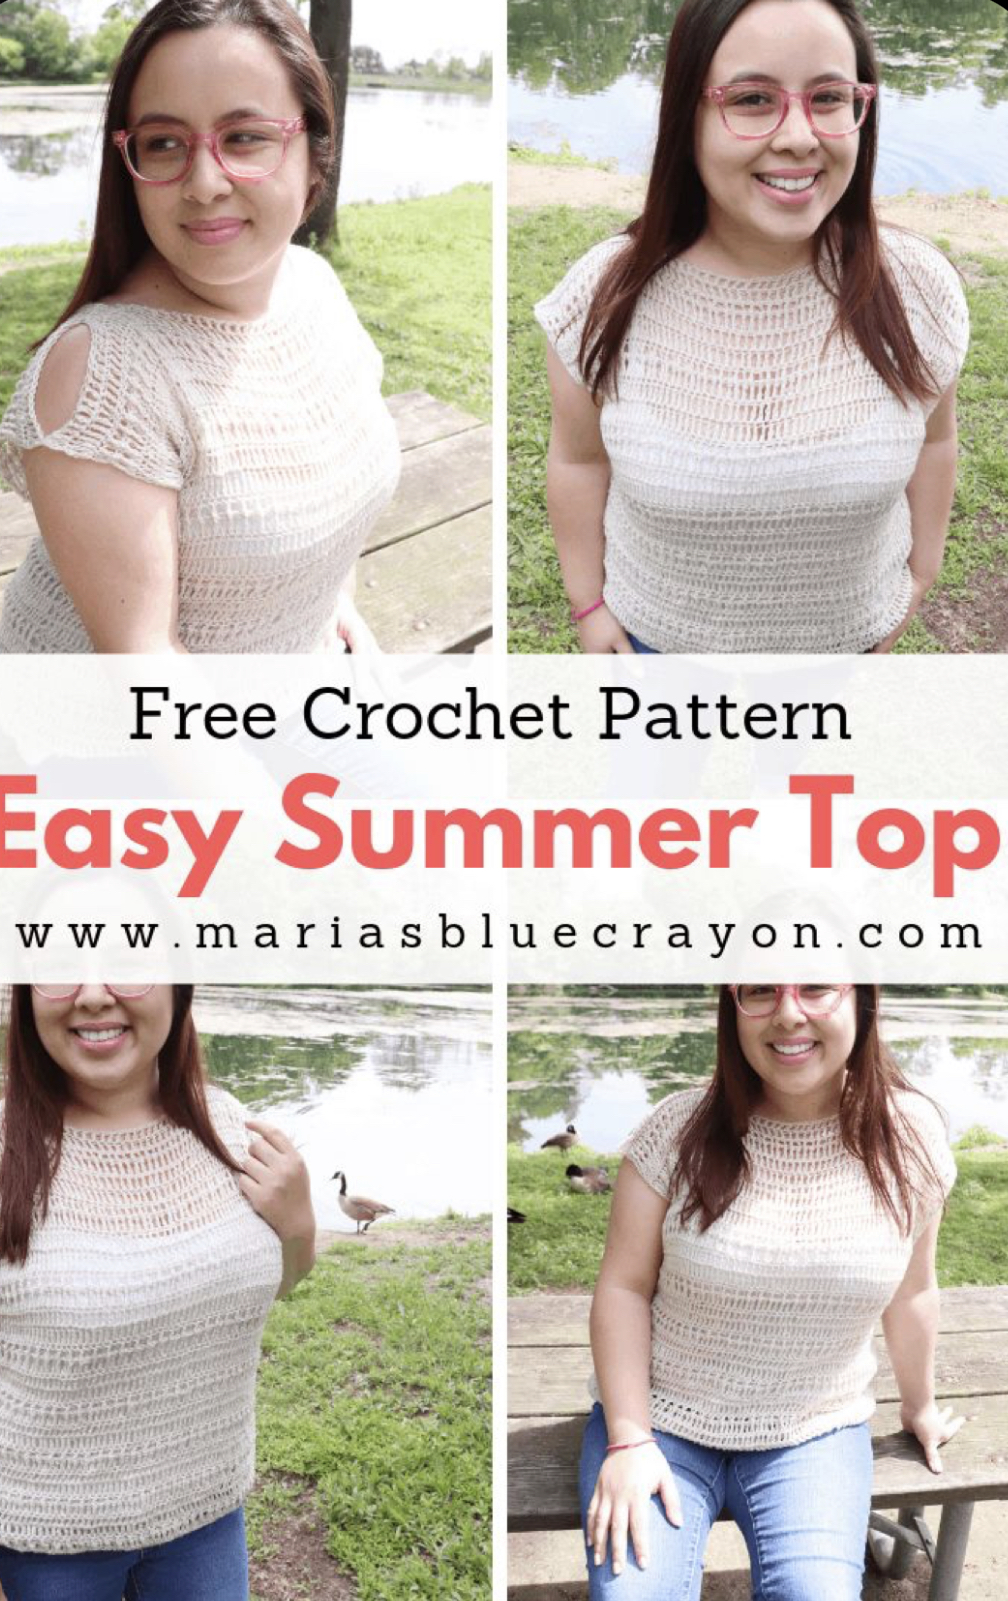 How to Crochet a Light Summer Top (Free Pattern) – FREE CROCHET PATTERN ...